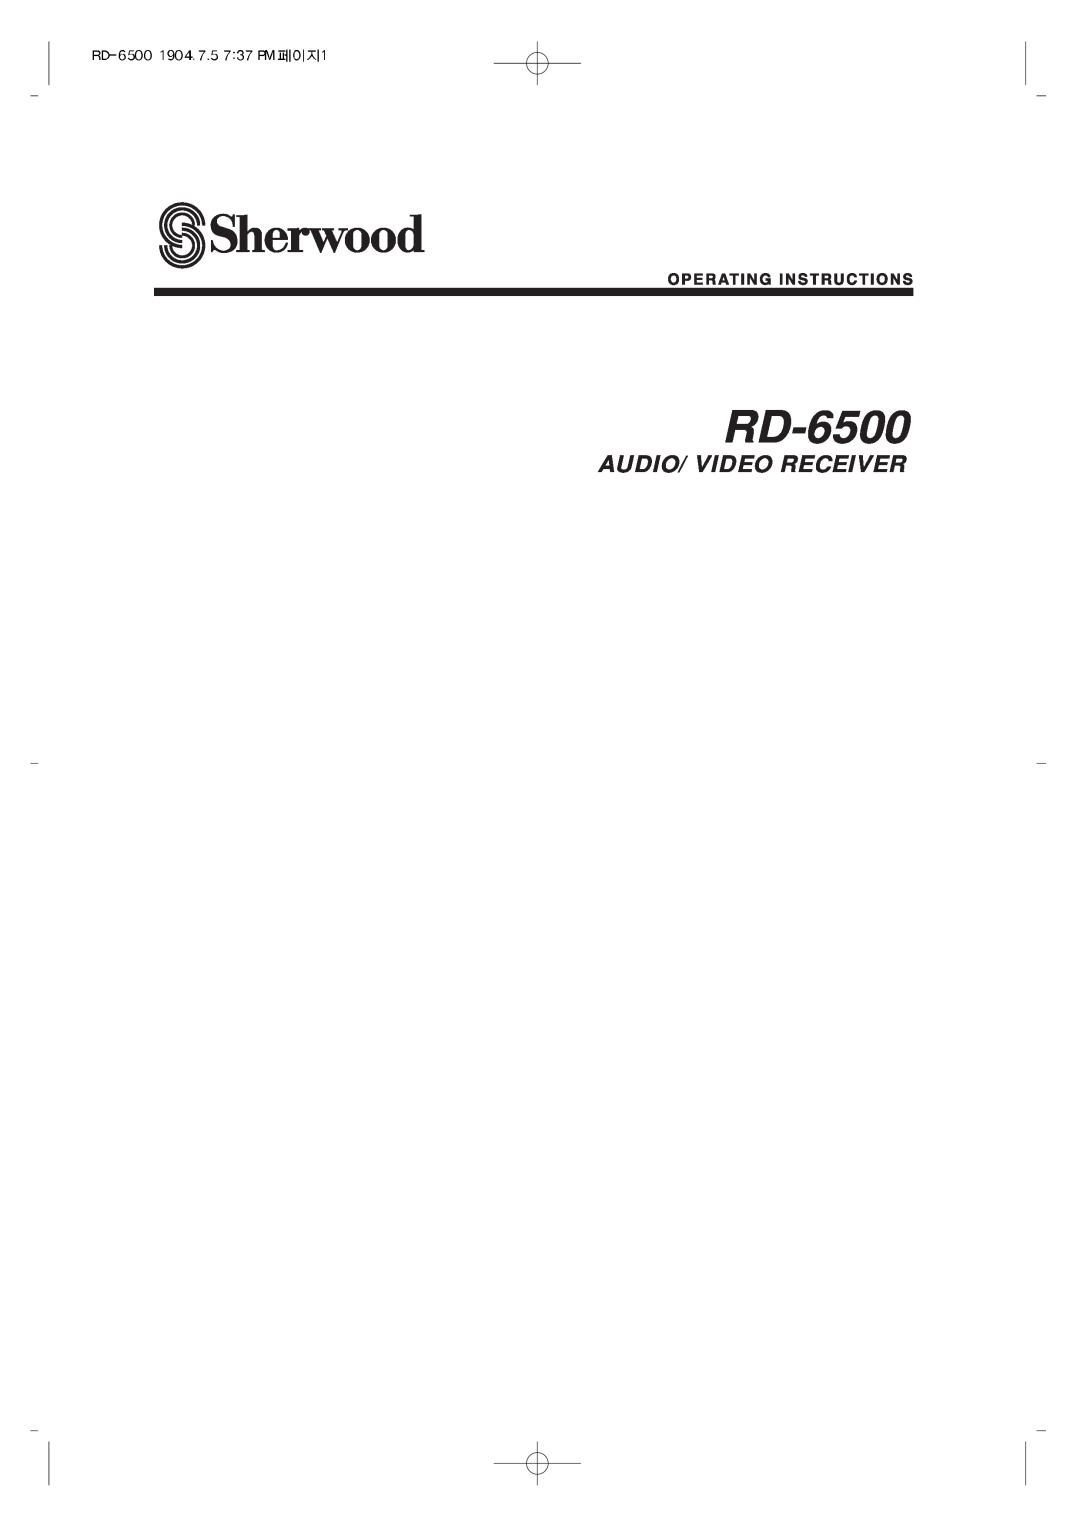 Sherwood RD-6500 manual Audio/Video Receiver 